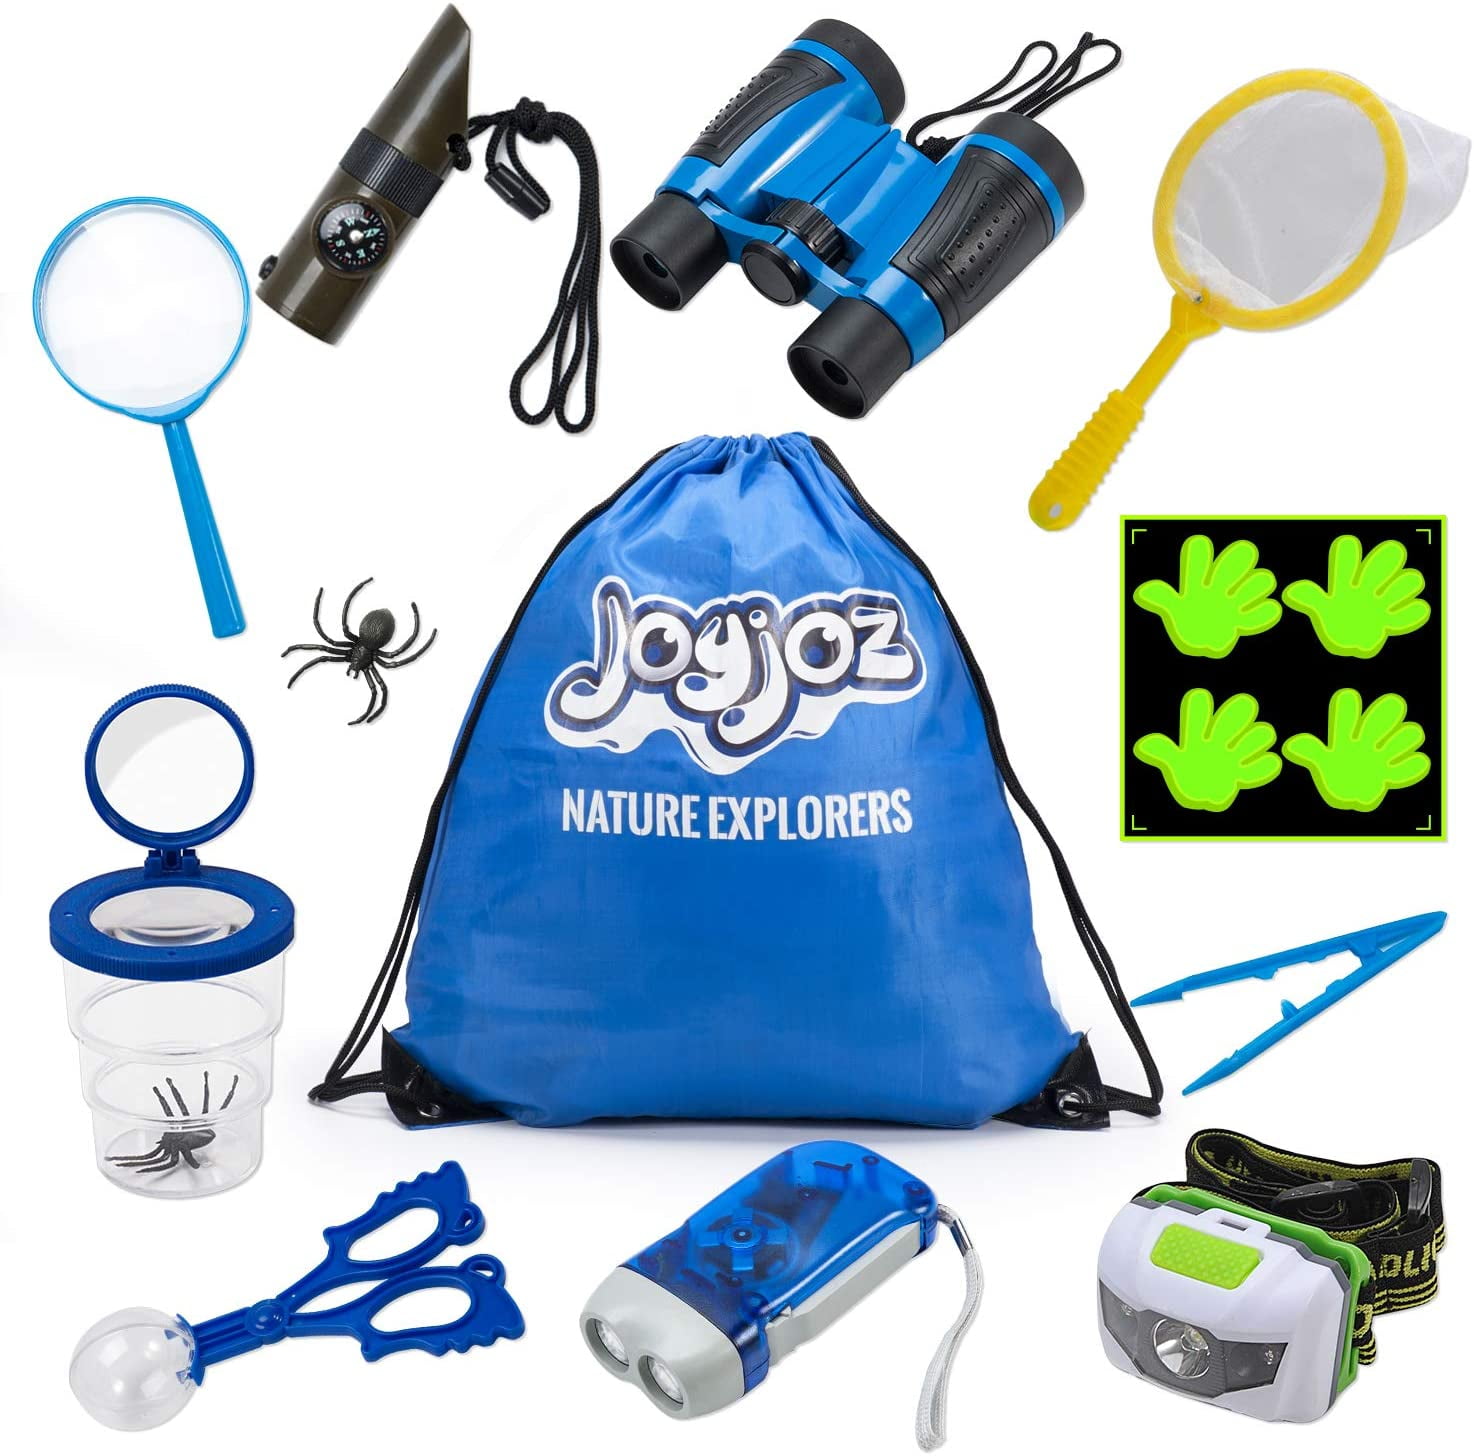 Net ESSENSON Outdoor Explorer Kit & Bug Catcher Set with Binoculars Flashlight 